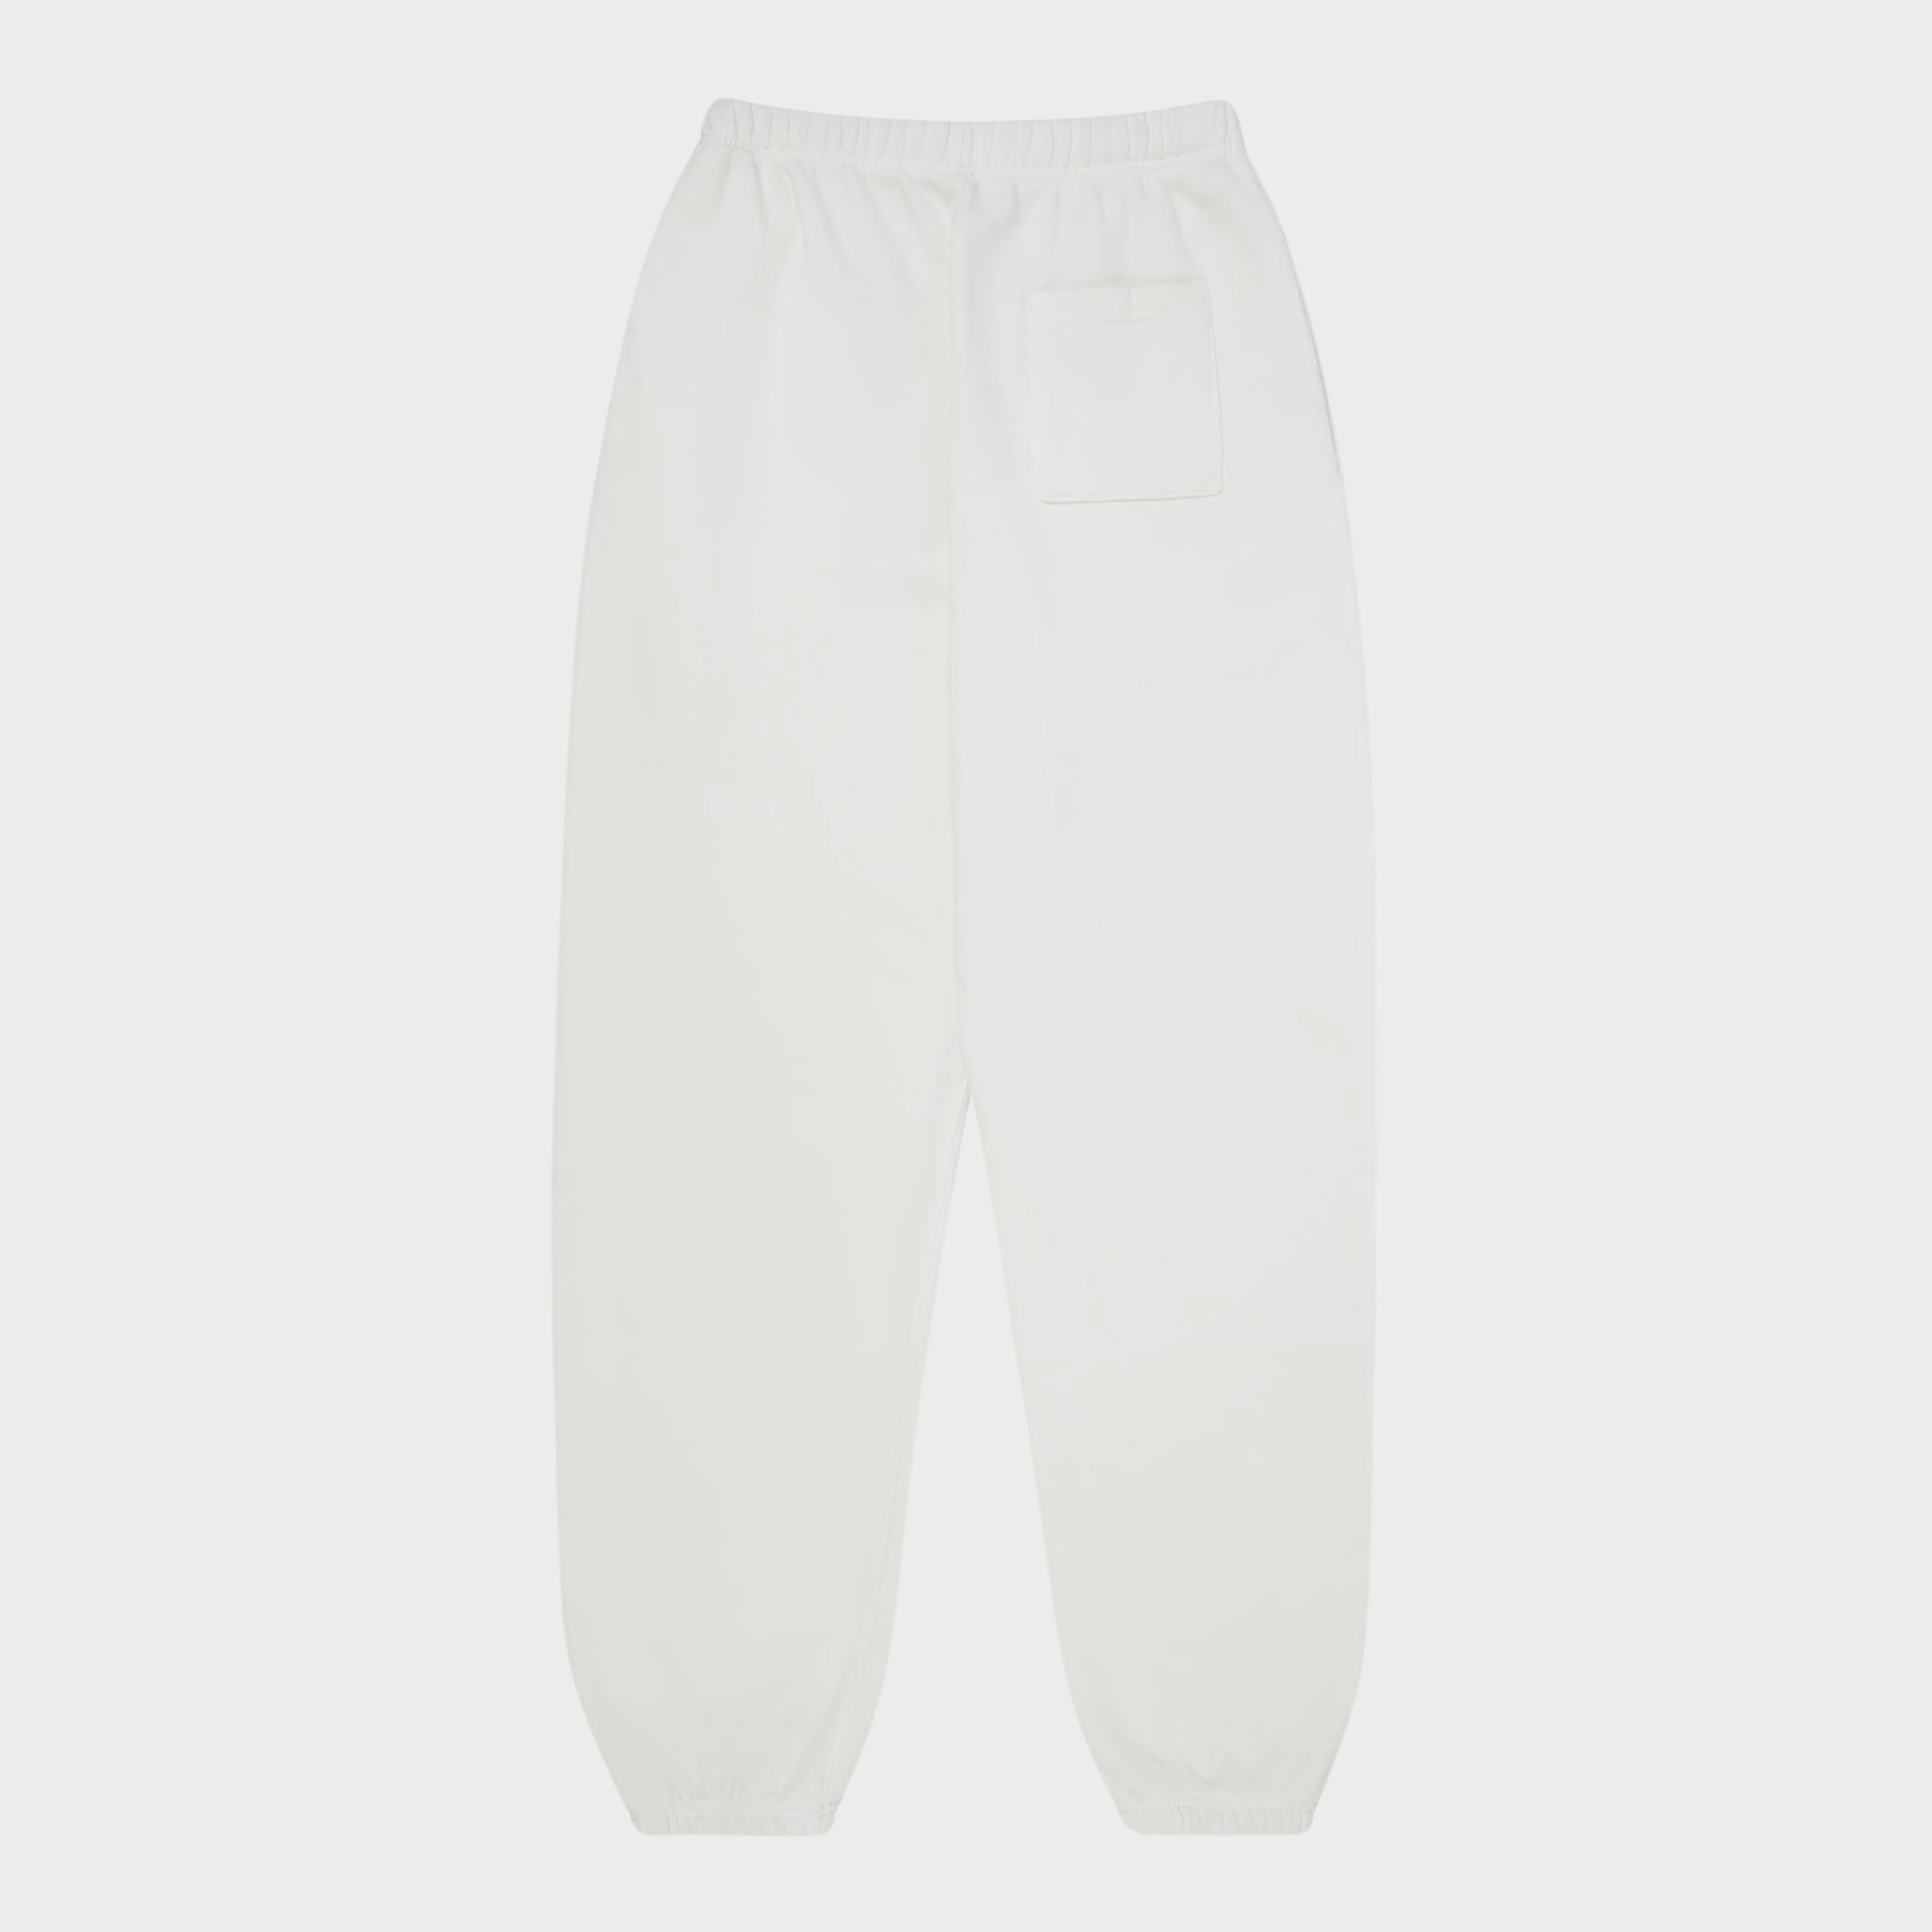 American Classic Sweatpants (White)